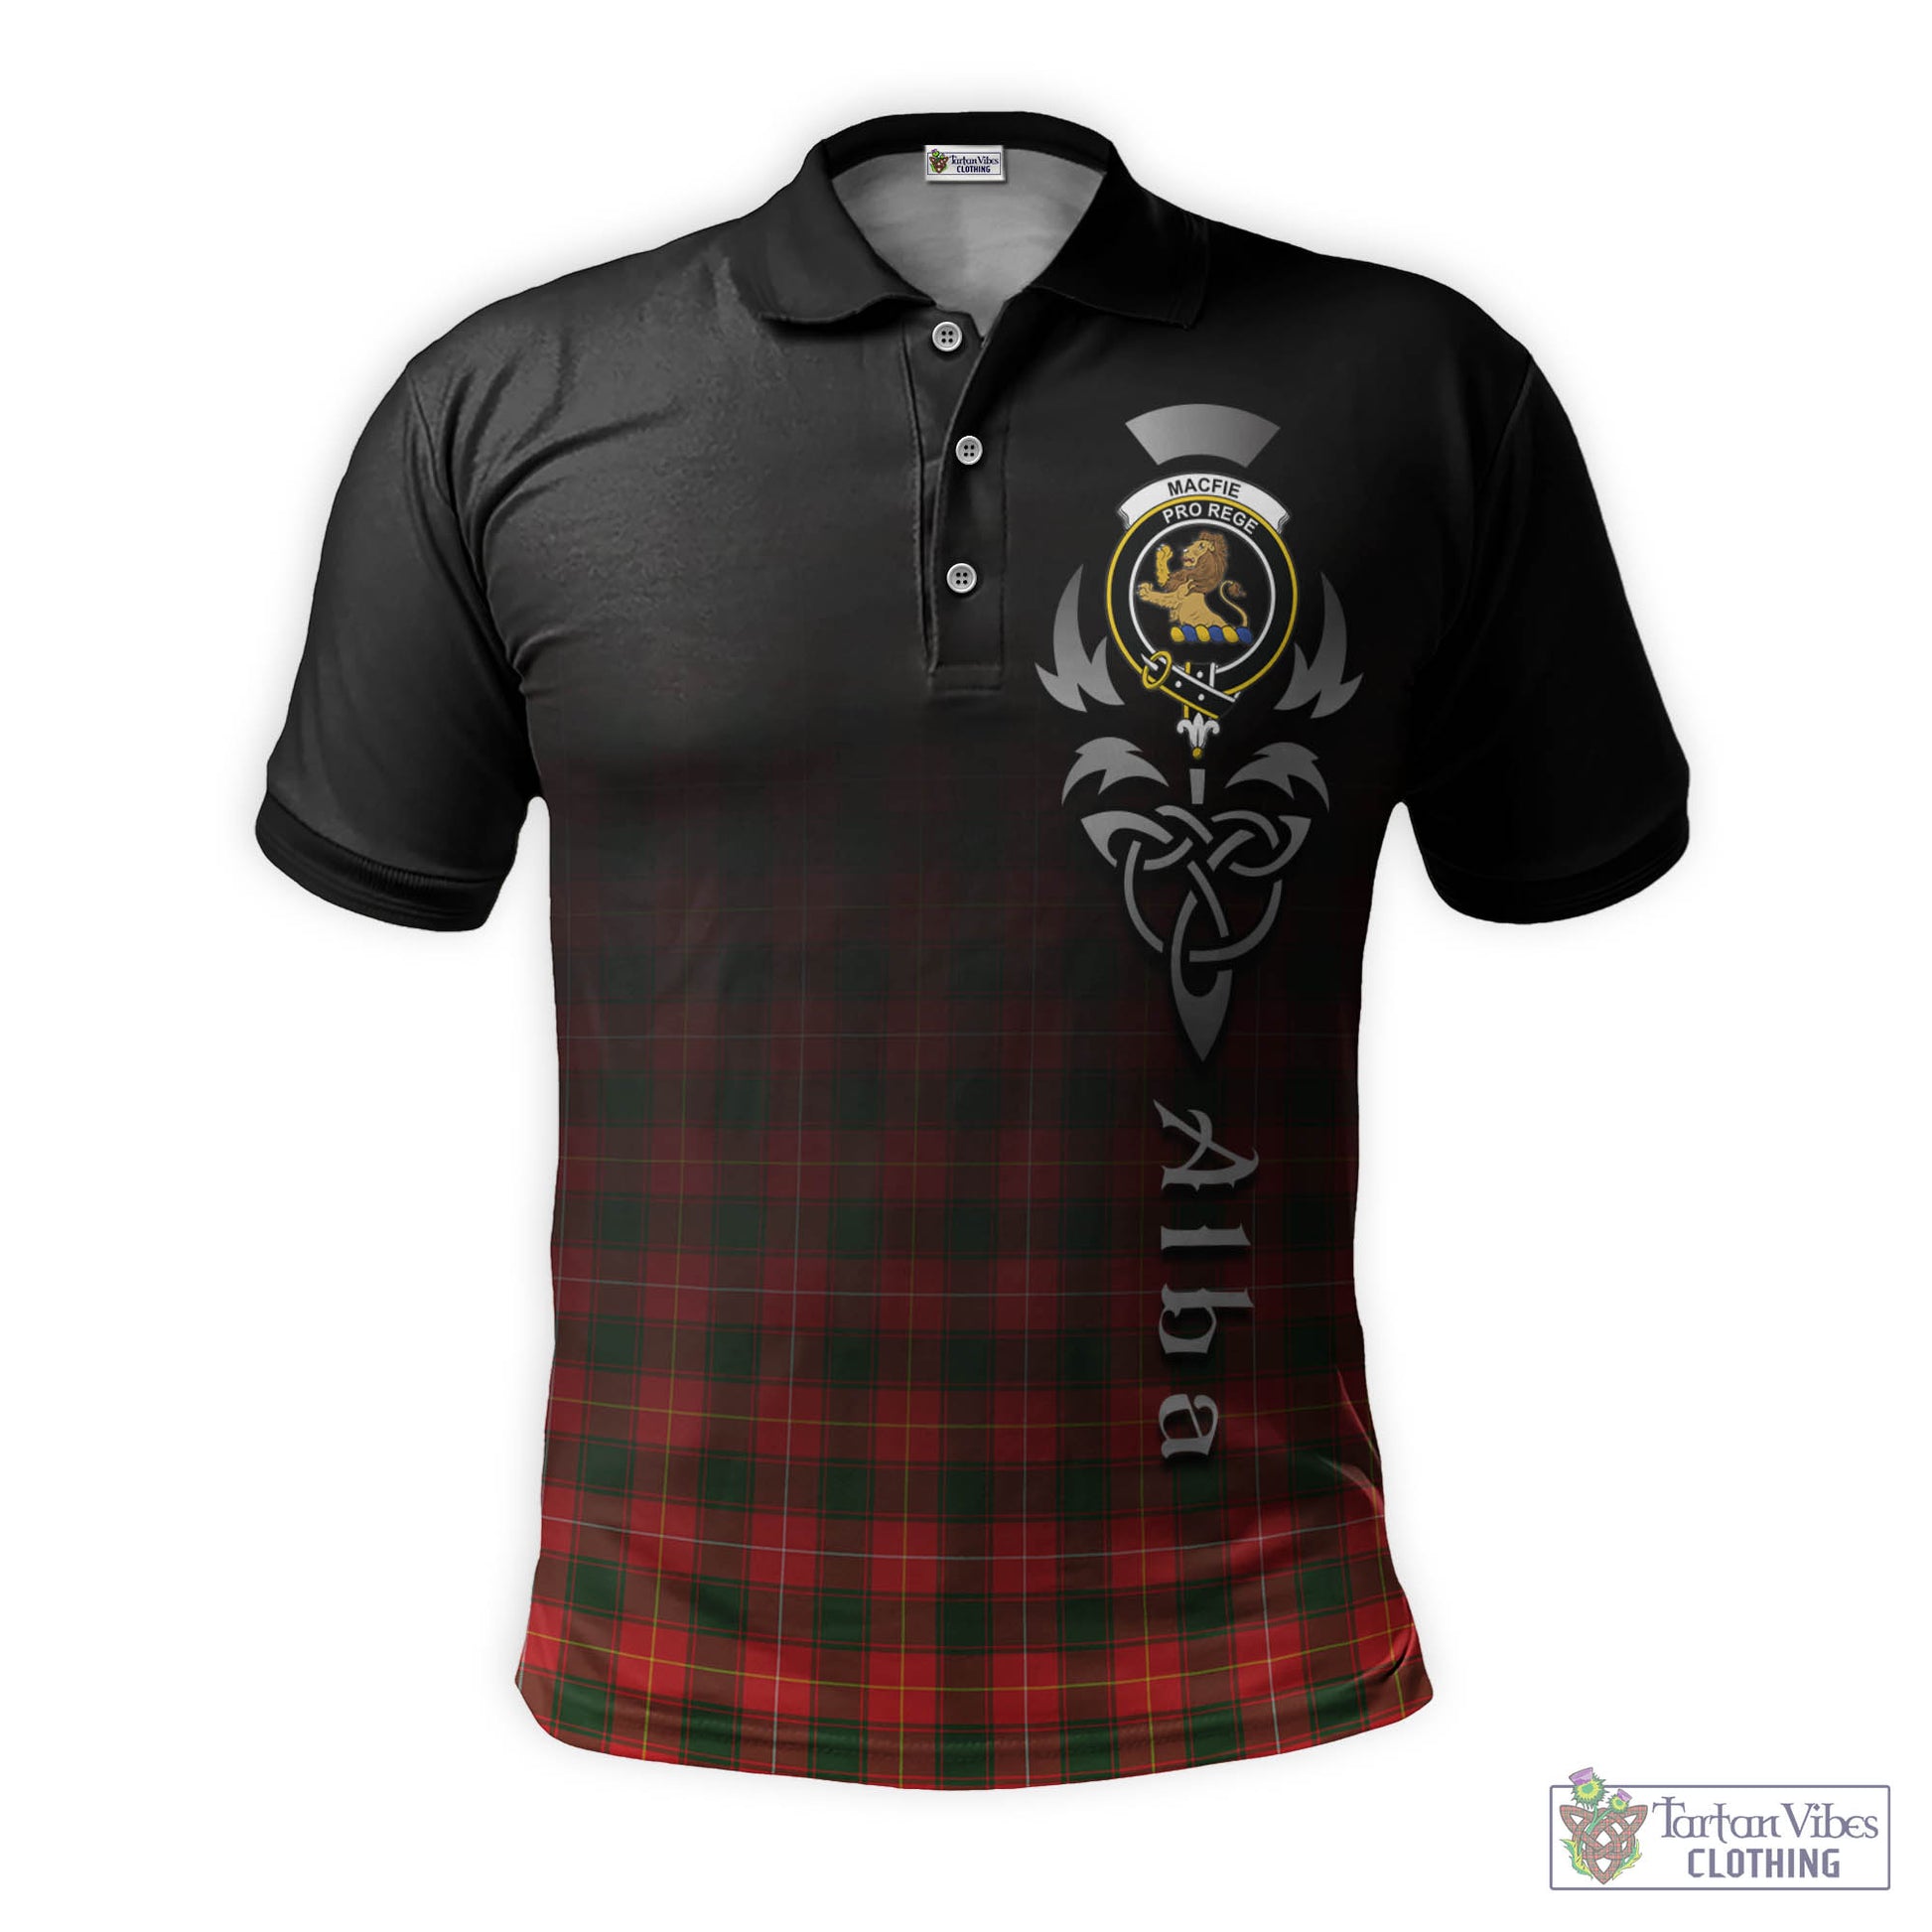 Tartan Vibes Clothing MacFie Modern Tartan Polo Shirt Featuring Alba Gu Brath Family Crest Celtic Inspired